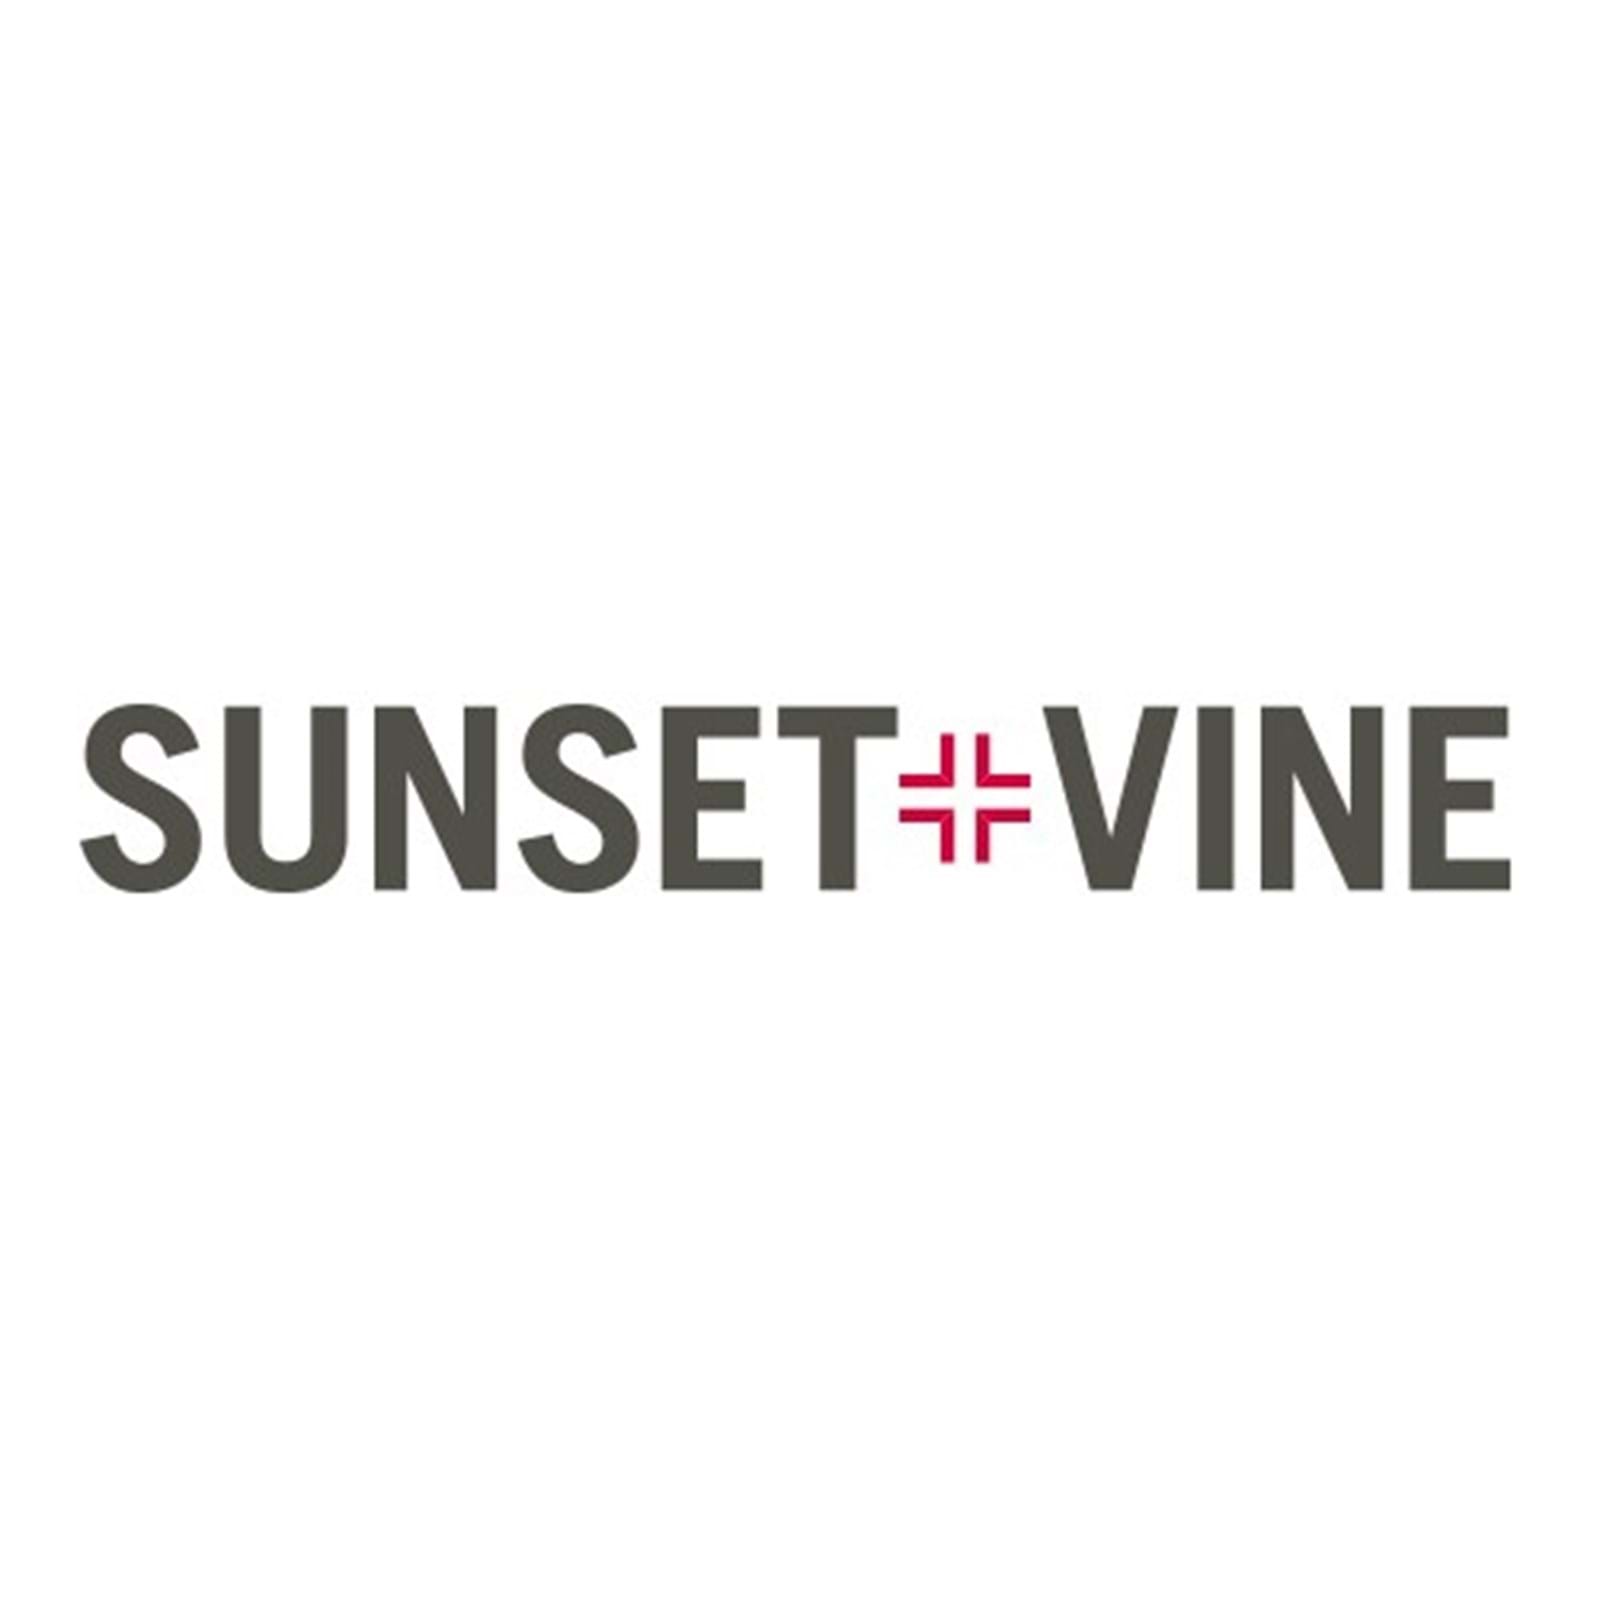 ICCTV/Sunset+Vine To Deliver Broadcast For First Ever ICC World Test Championship Final